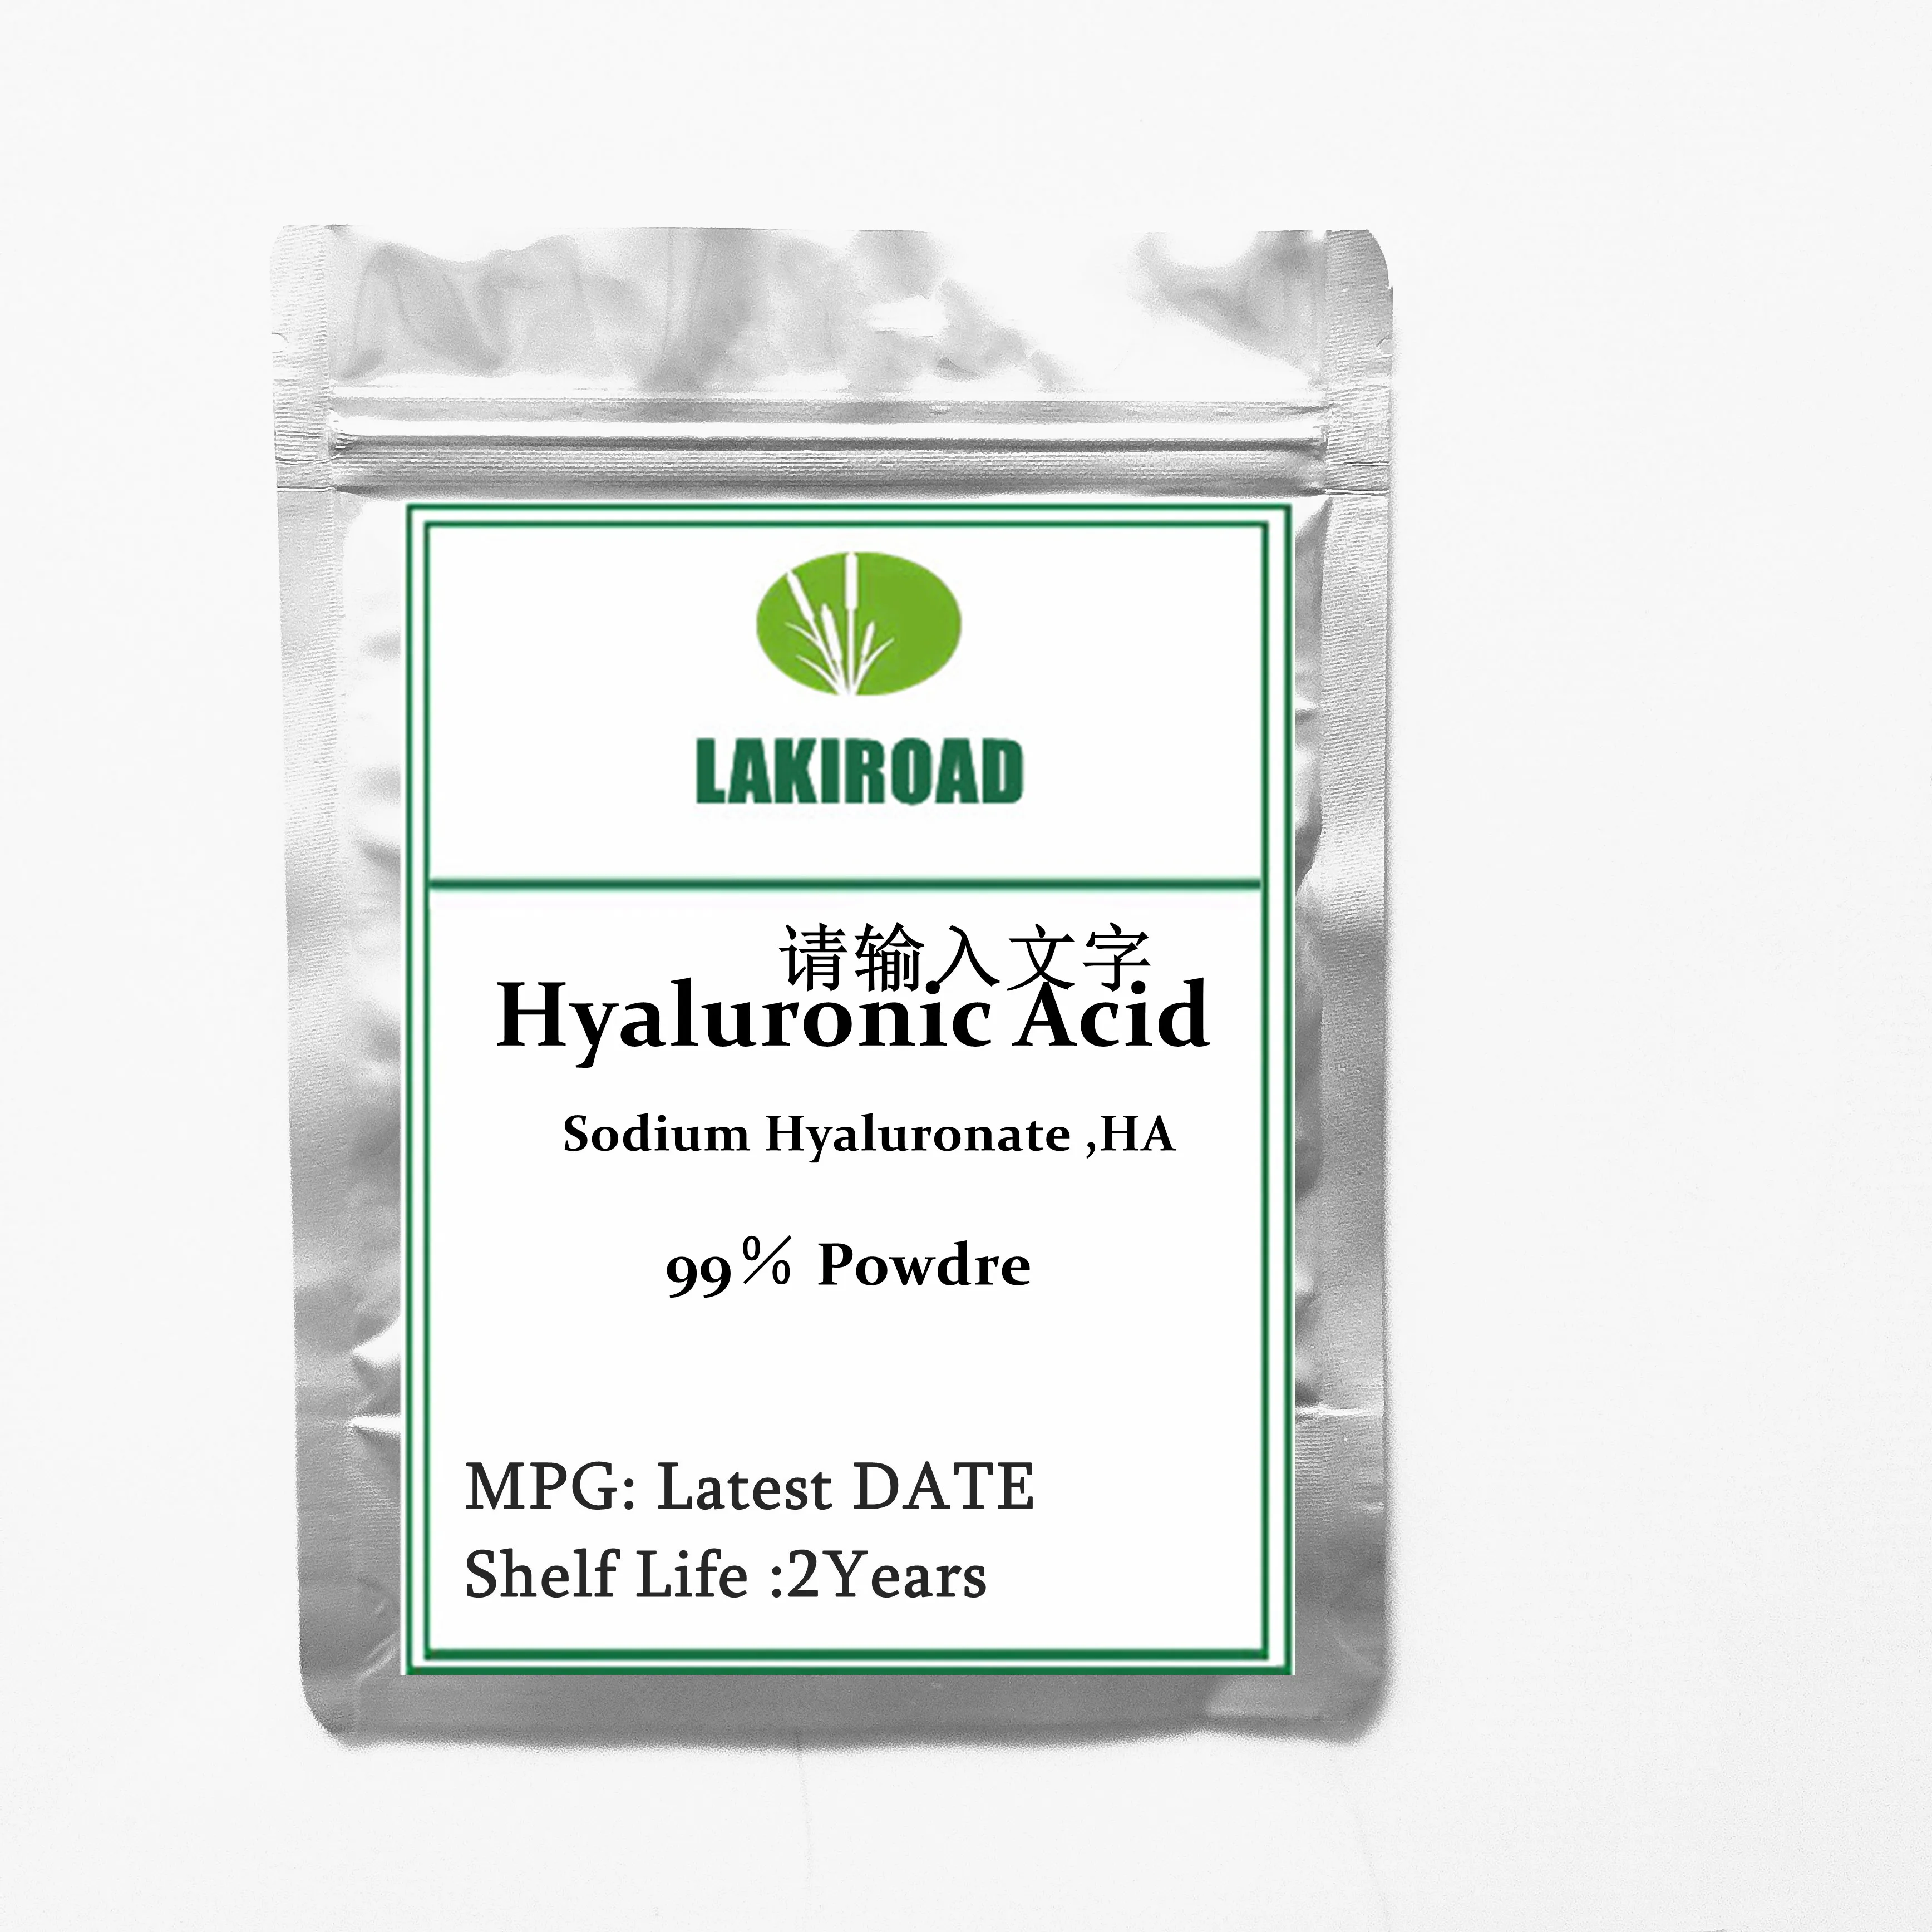 

Pure Hyaluronic Acid Powder,HA,Sodium Hyaluronate Powder, Whitening Skin,promoting Skin Health,Moisturizing,Anti Aging